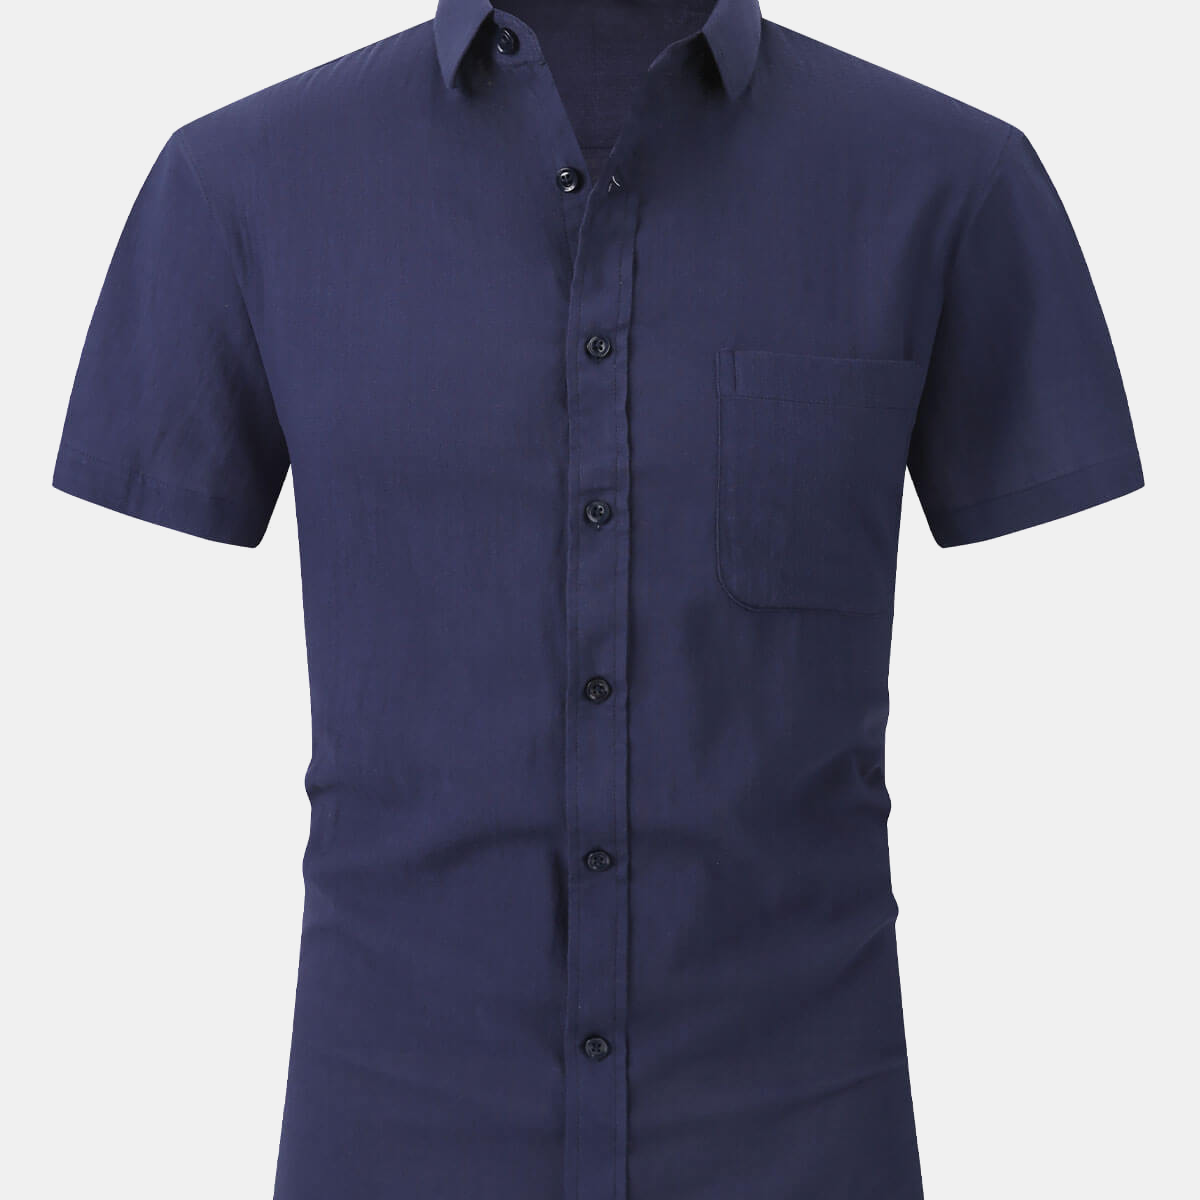 Men's Cotton Casual Pocket Solid Color Summer Short Sleeve Shirt